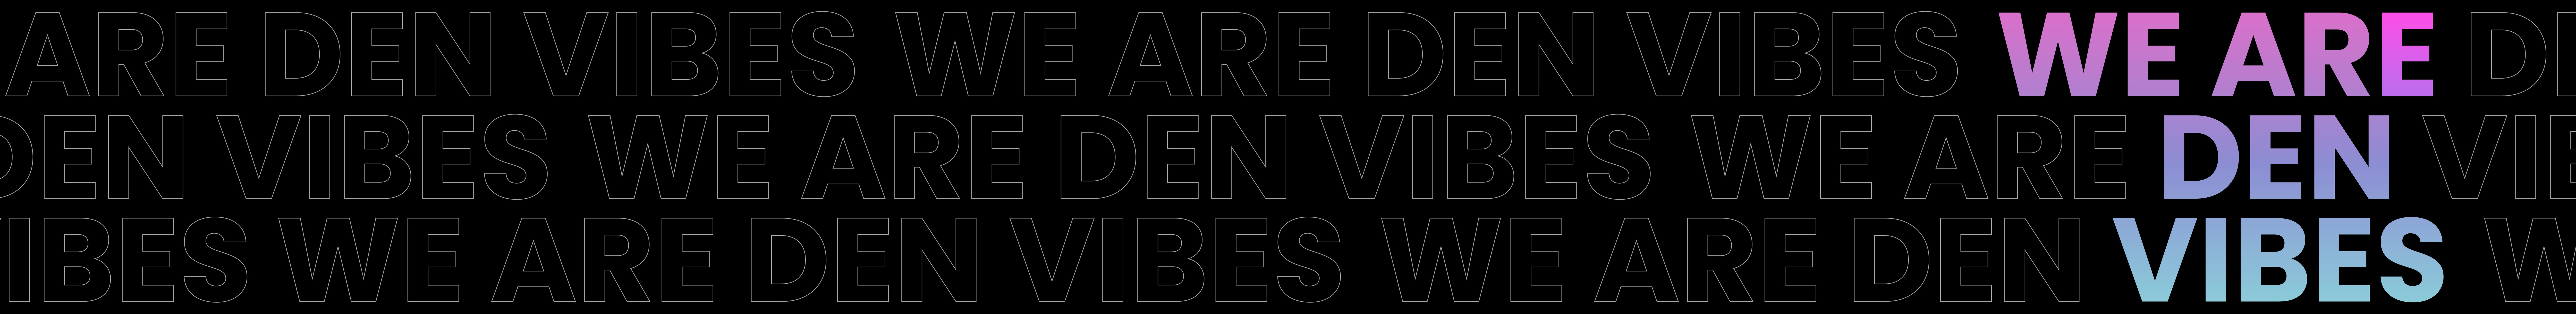 Denvibes | Studio's profile banner